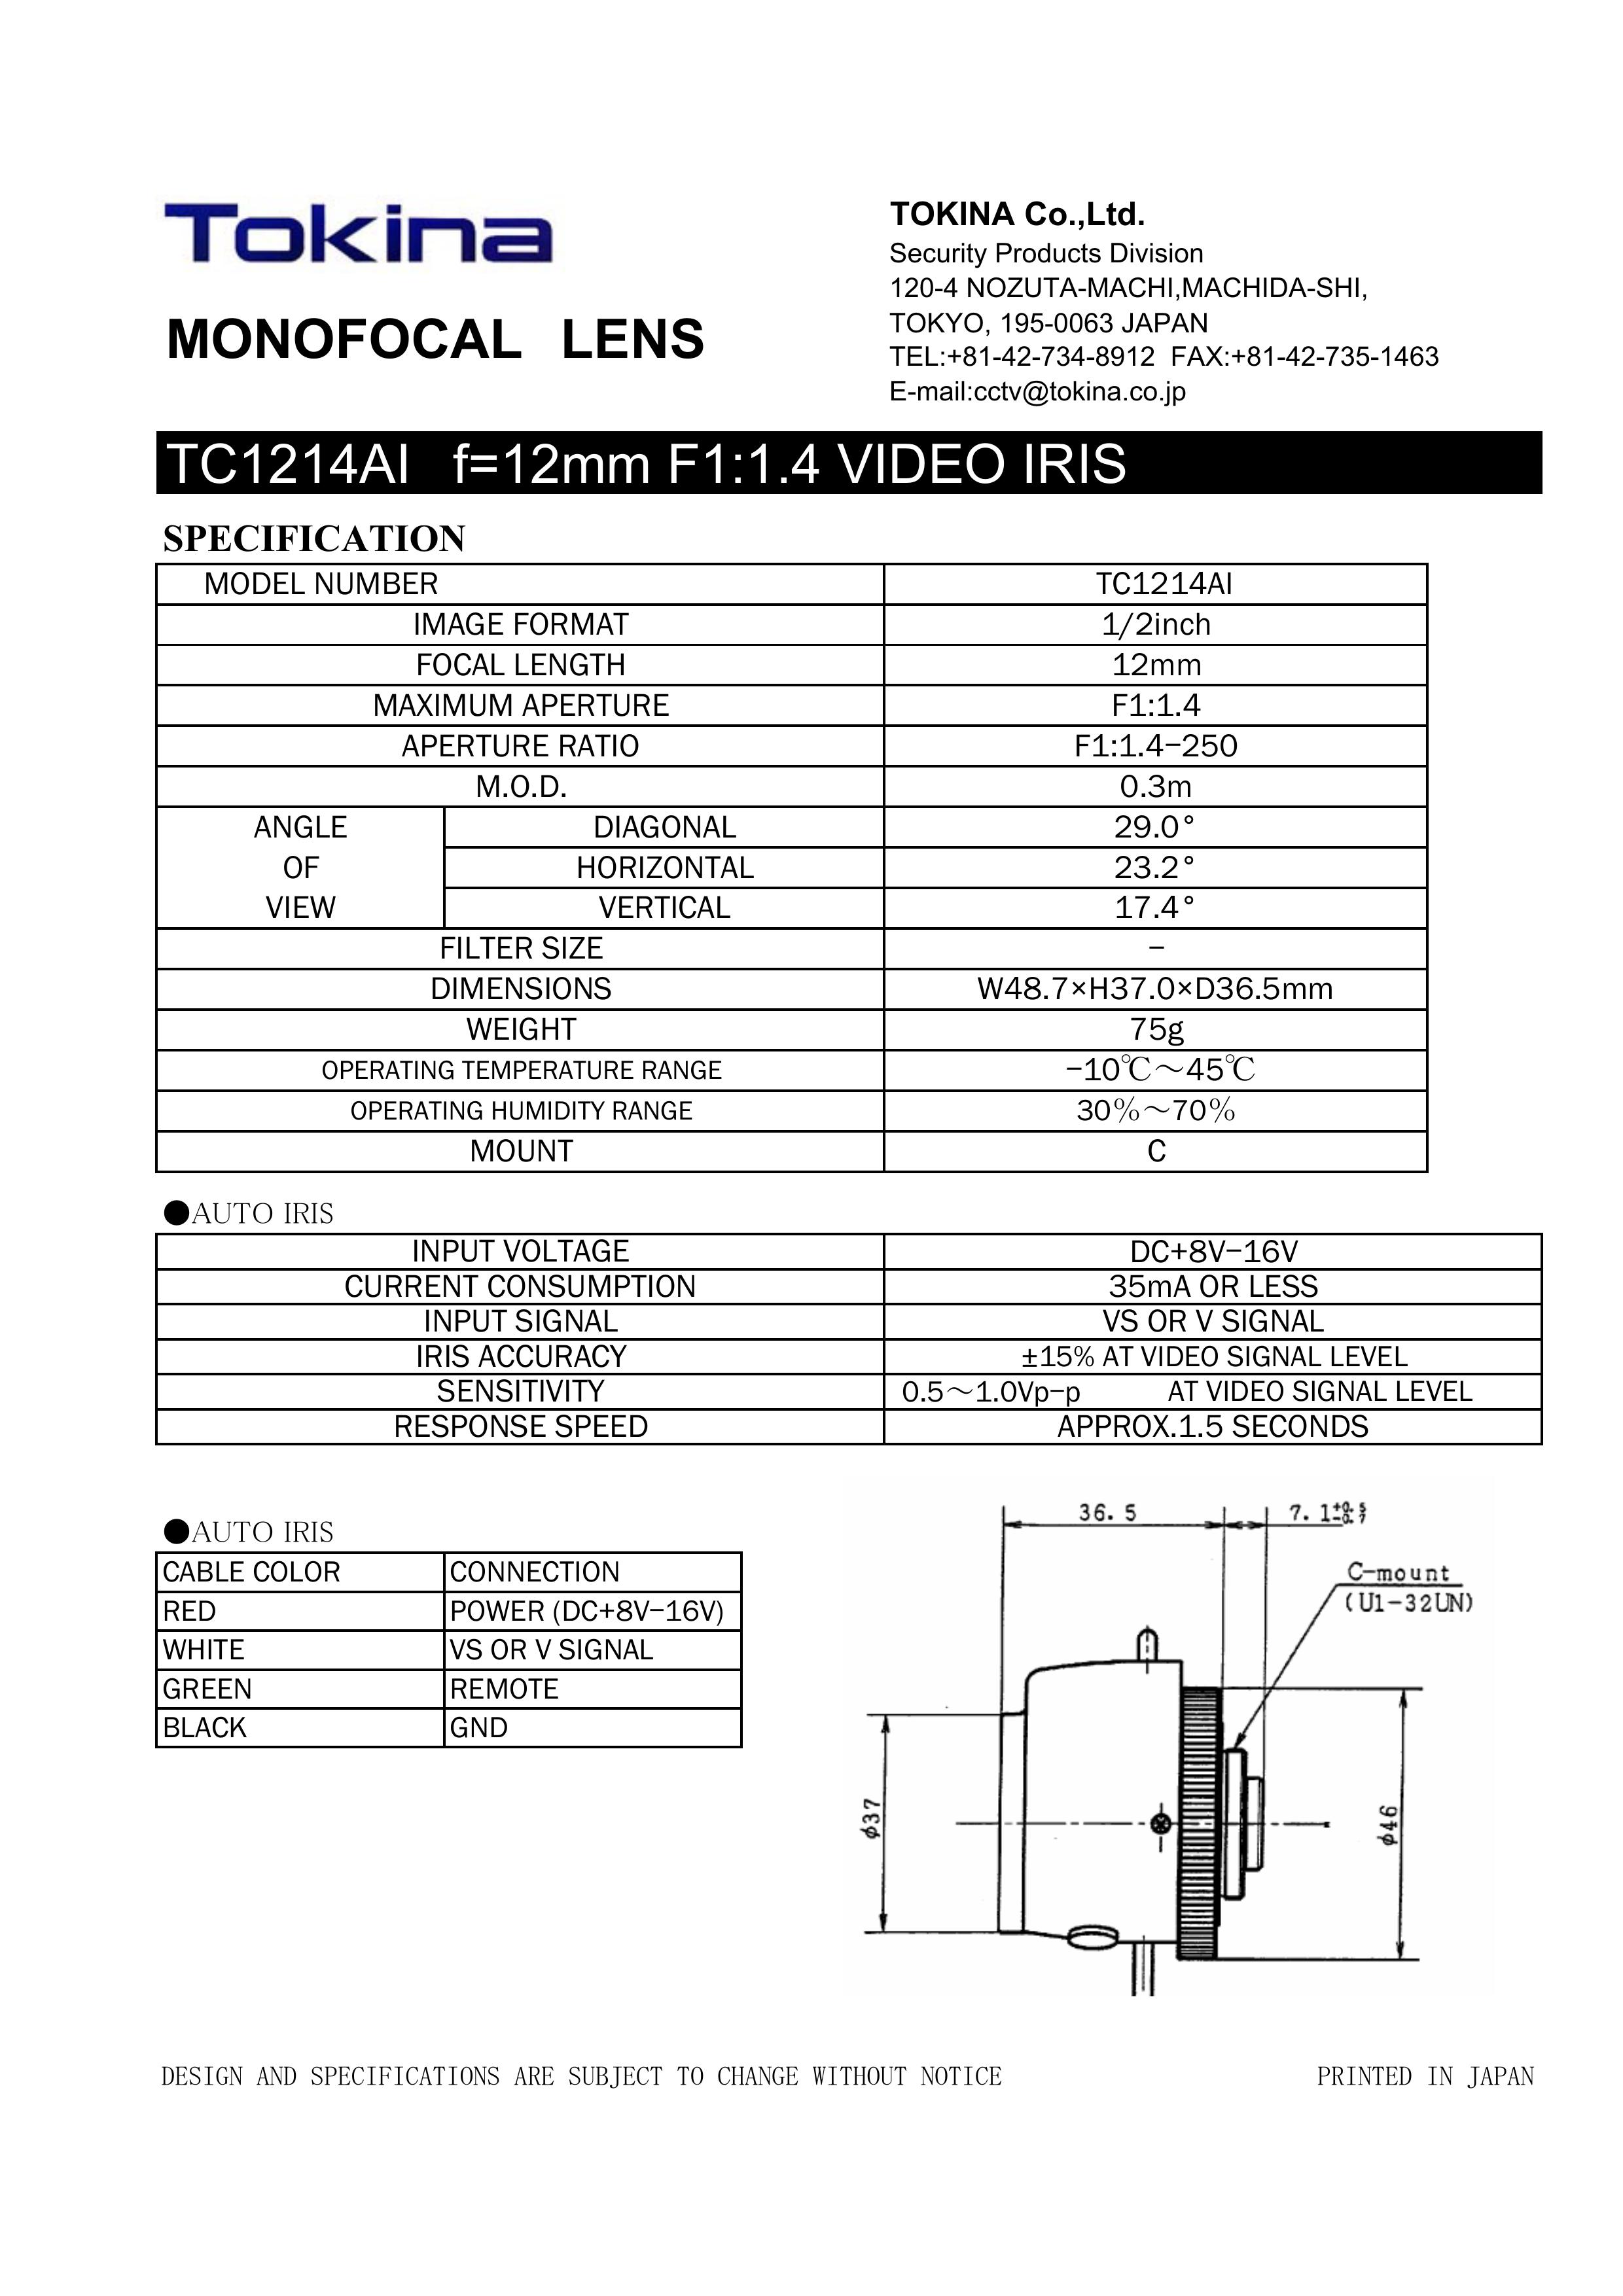 Tokina TC1214AI Camera Accessories User Manual